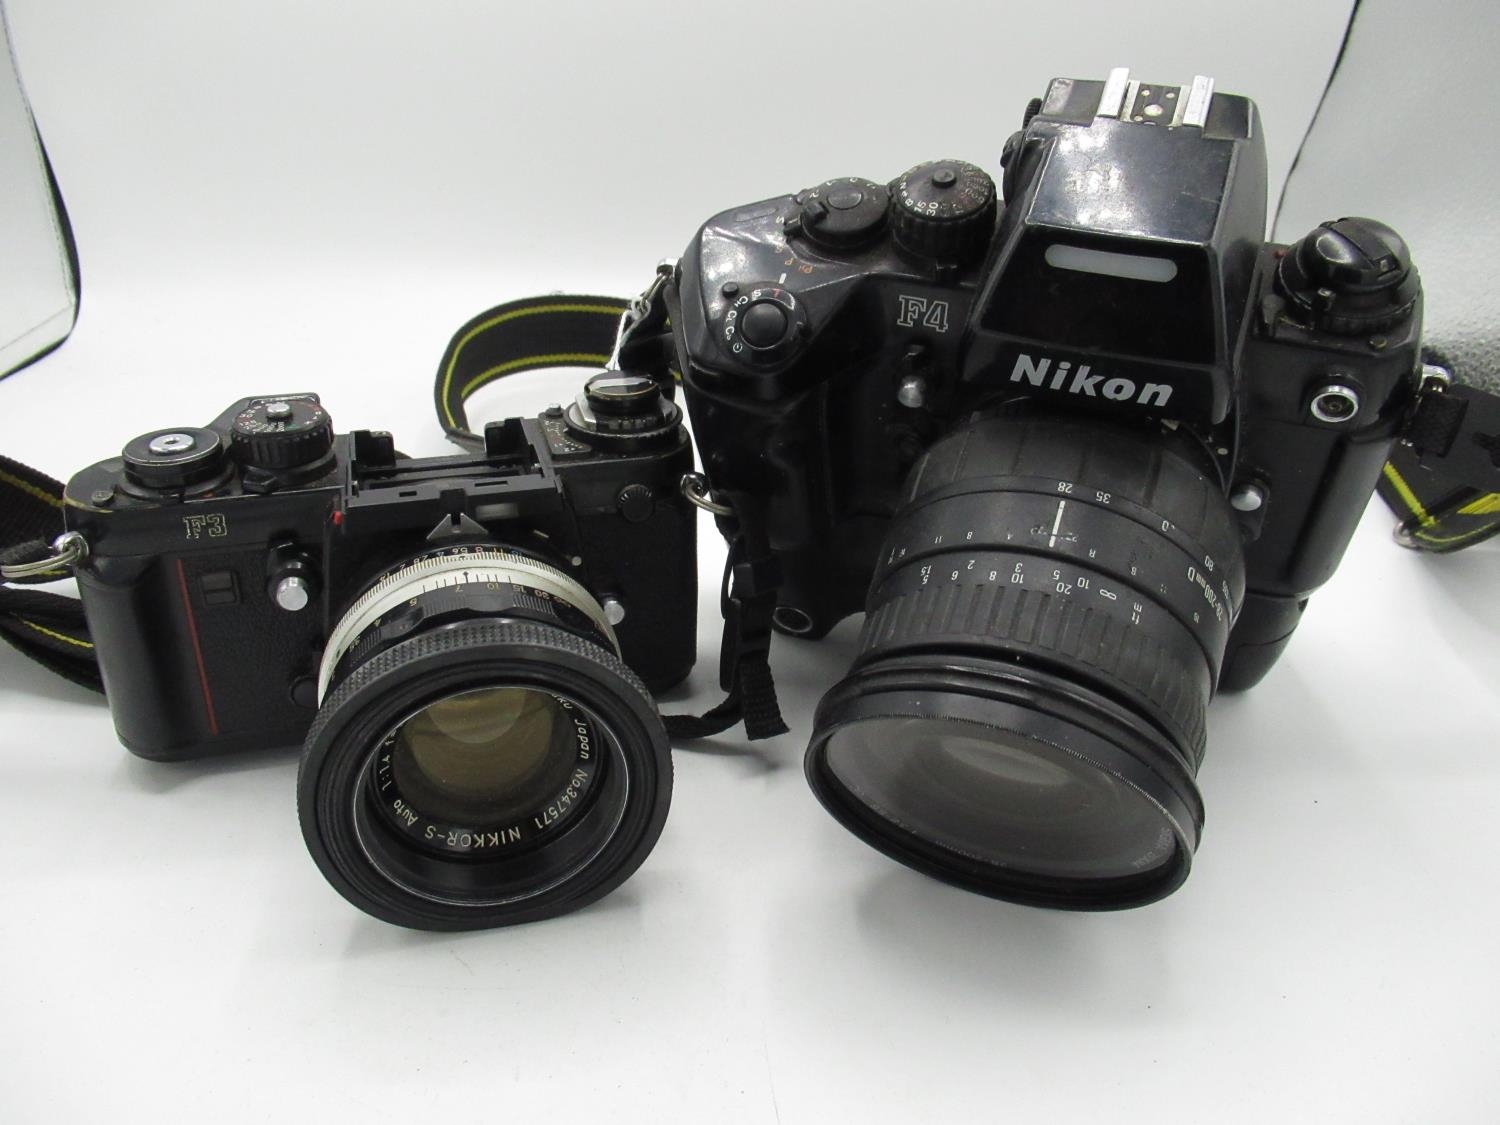 Mark down grass Lunar New Year Nikon F4 auto focus SLR camera with Nikon MB23 grip, and a Sigma 28 - 200  autofocus lens (some inter